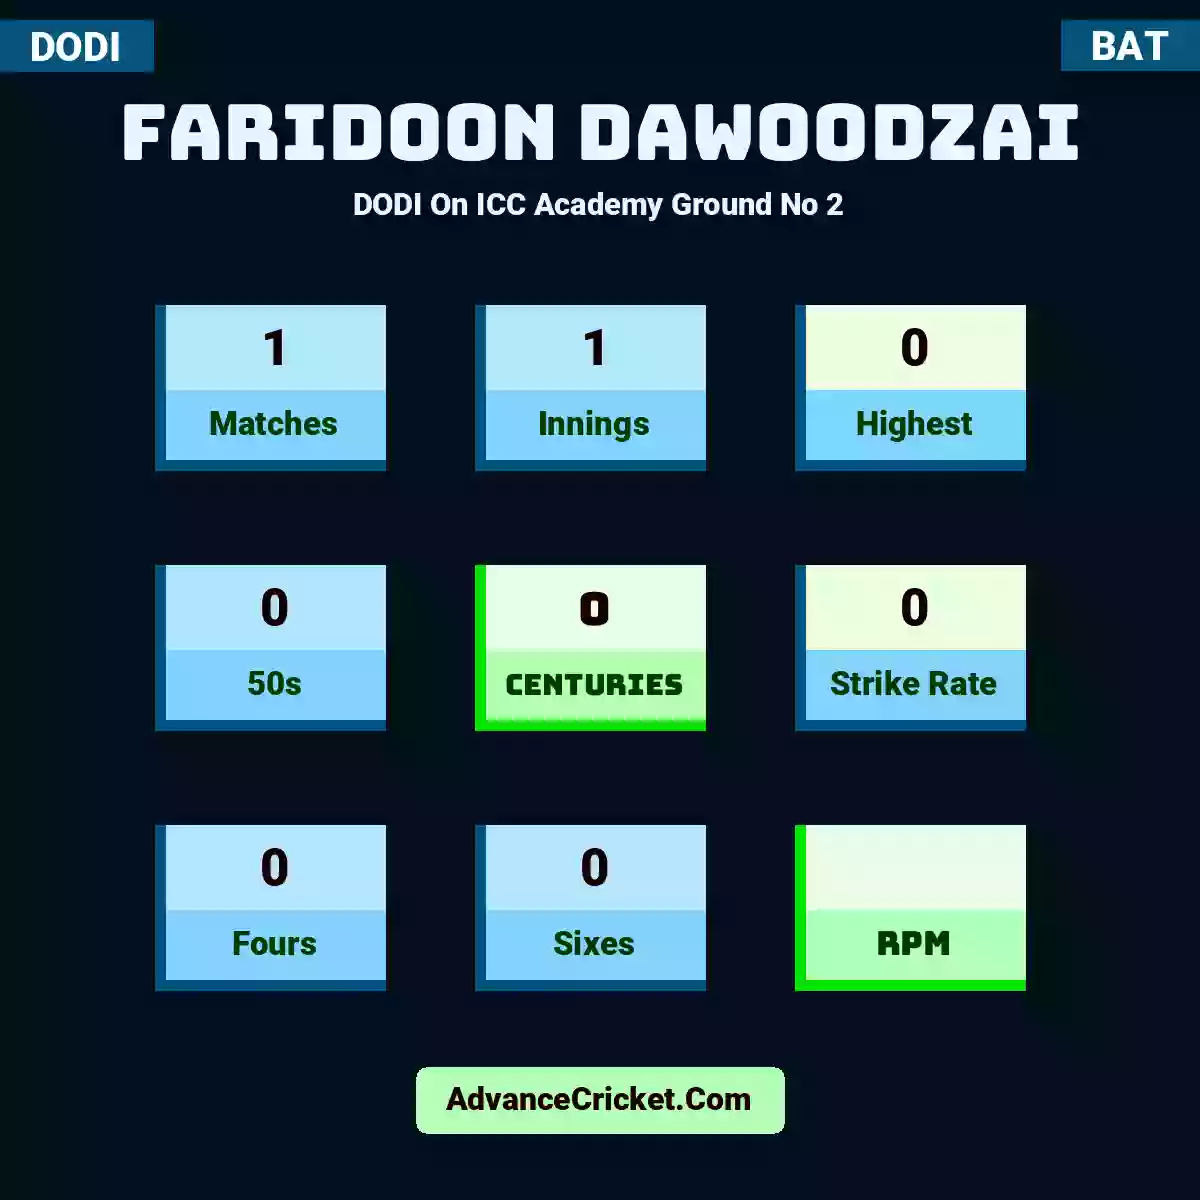 Faridoon Dawoodzai DODI  On ICC Academy Ground No 2, Faridoon Dawoodzai played 1 matches, scored 0 runs as highest, 0 half-centuries, and 0 centuries, with a strike rate of 0. F.Dawoodzai hit 0 fours and 0 sixes.